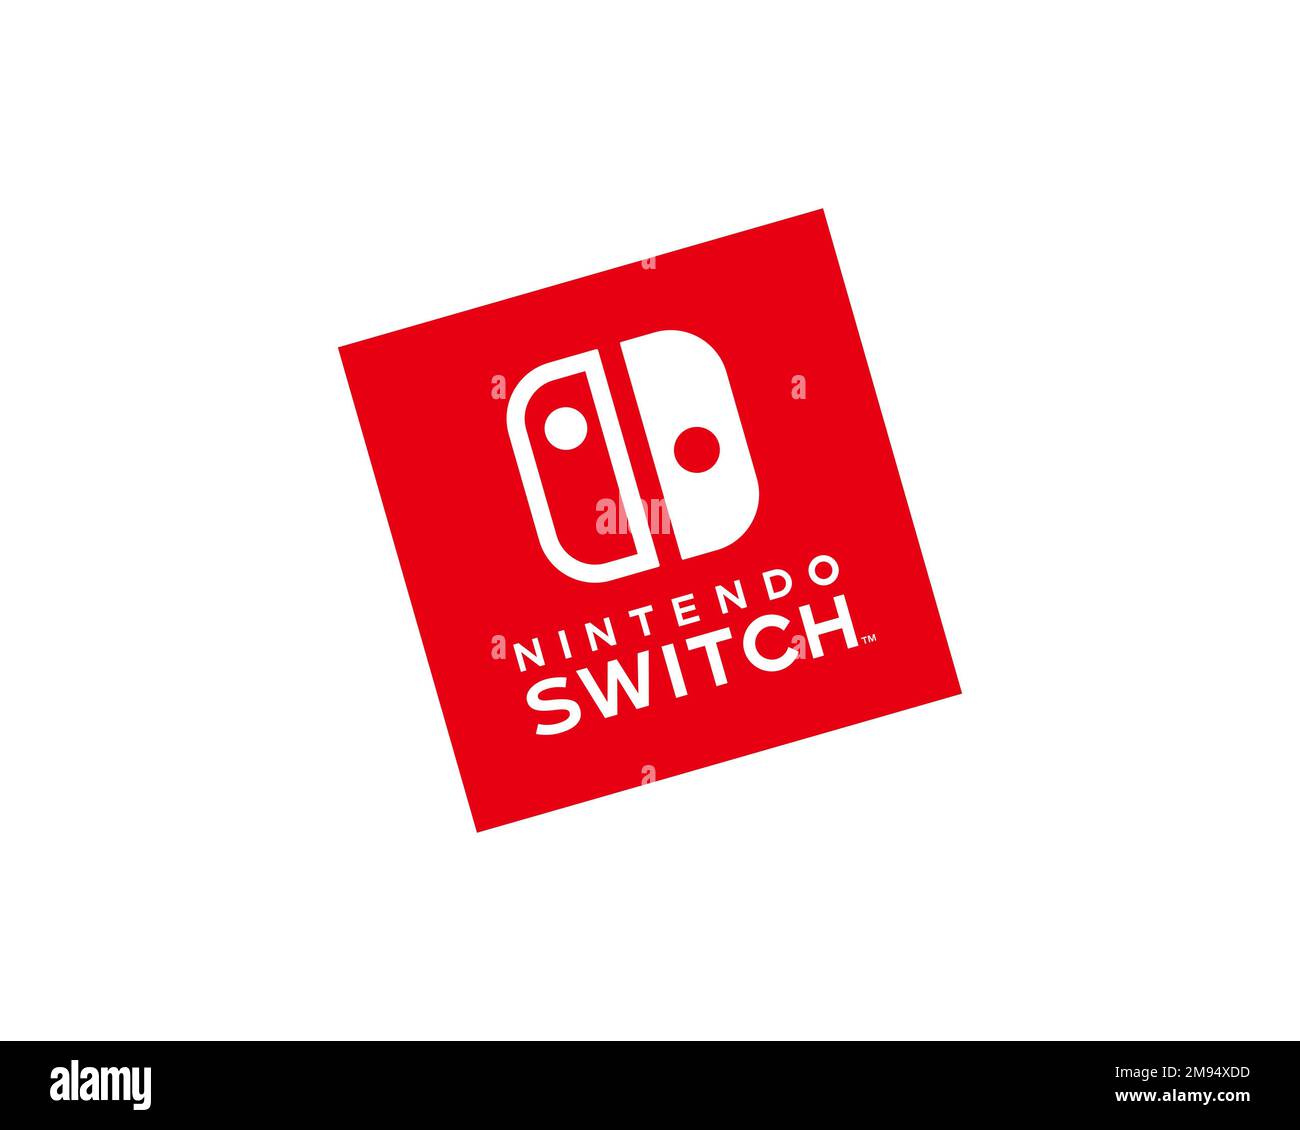 Nintendo Switch Lite, logo ruotato, sfondo bianco Foto stock - Alamy